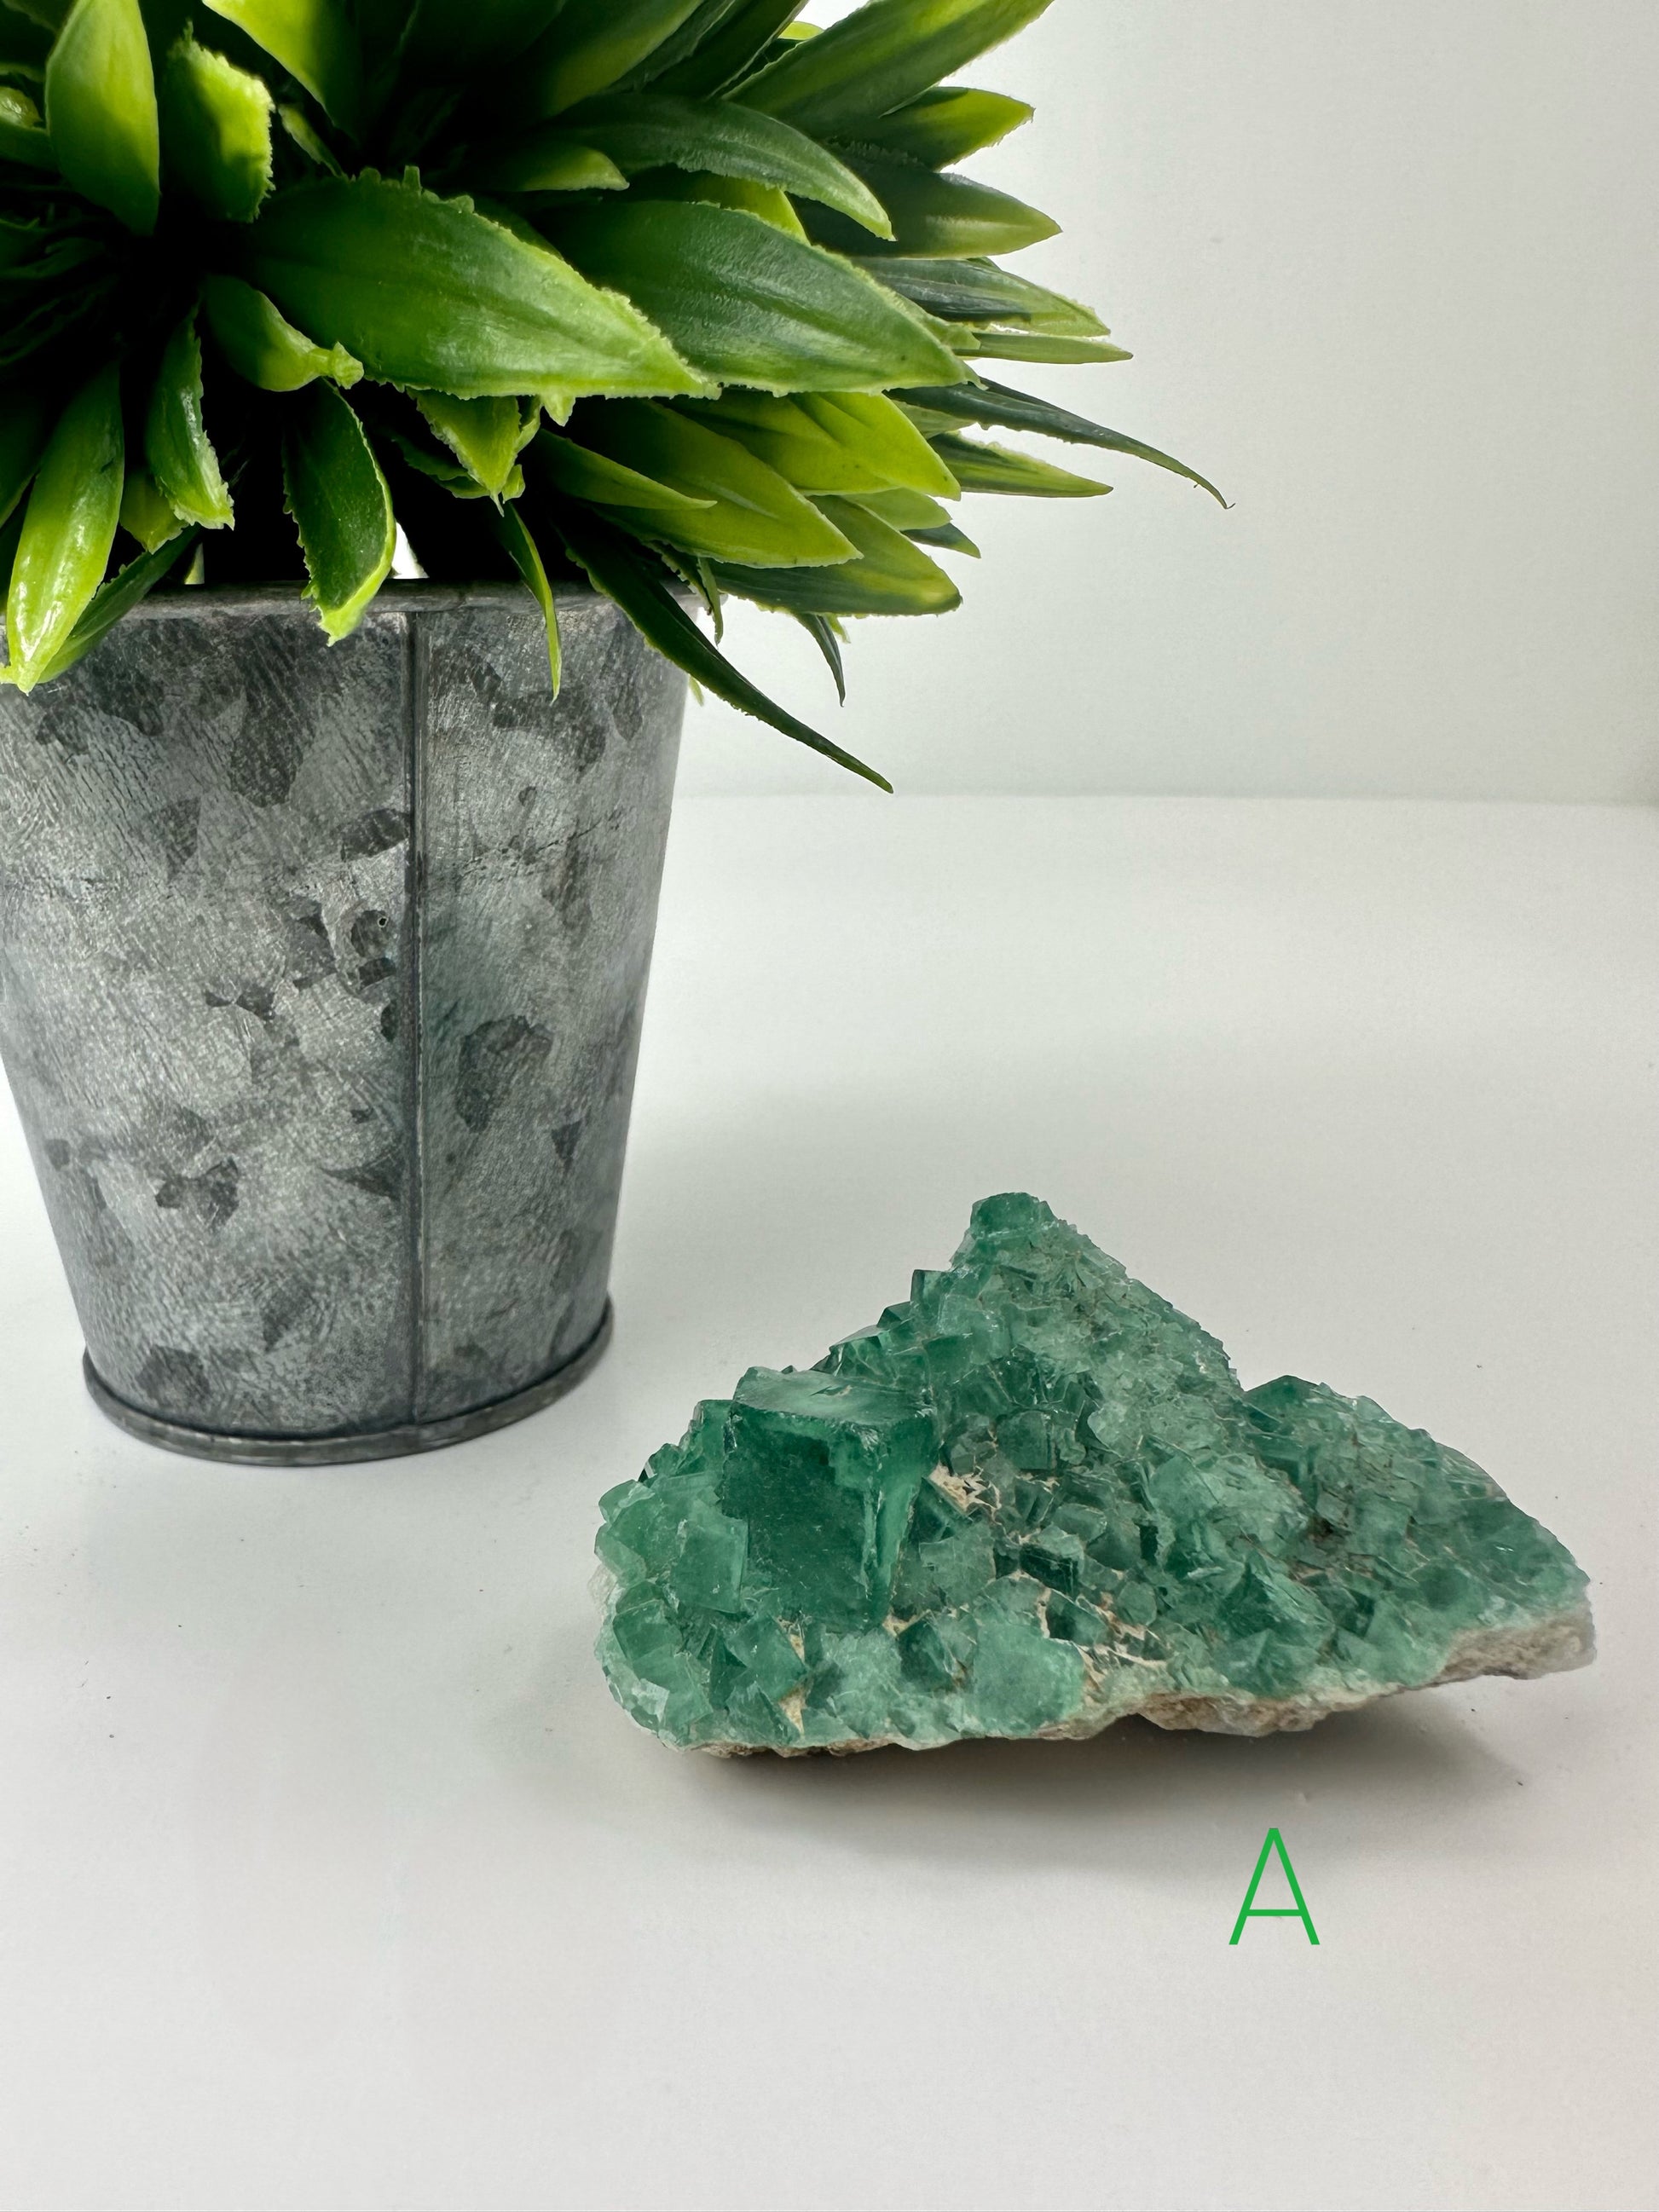 Green Fluorite (Emerald Green) Raw Specimen A